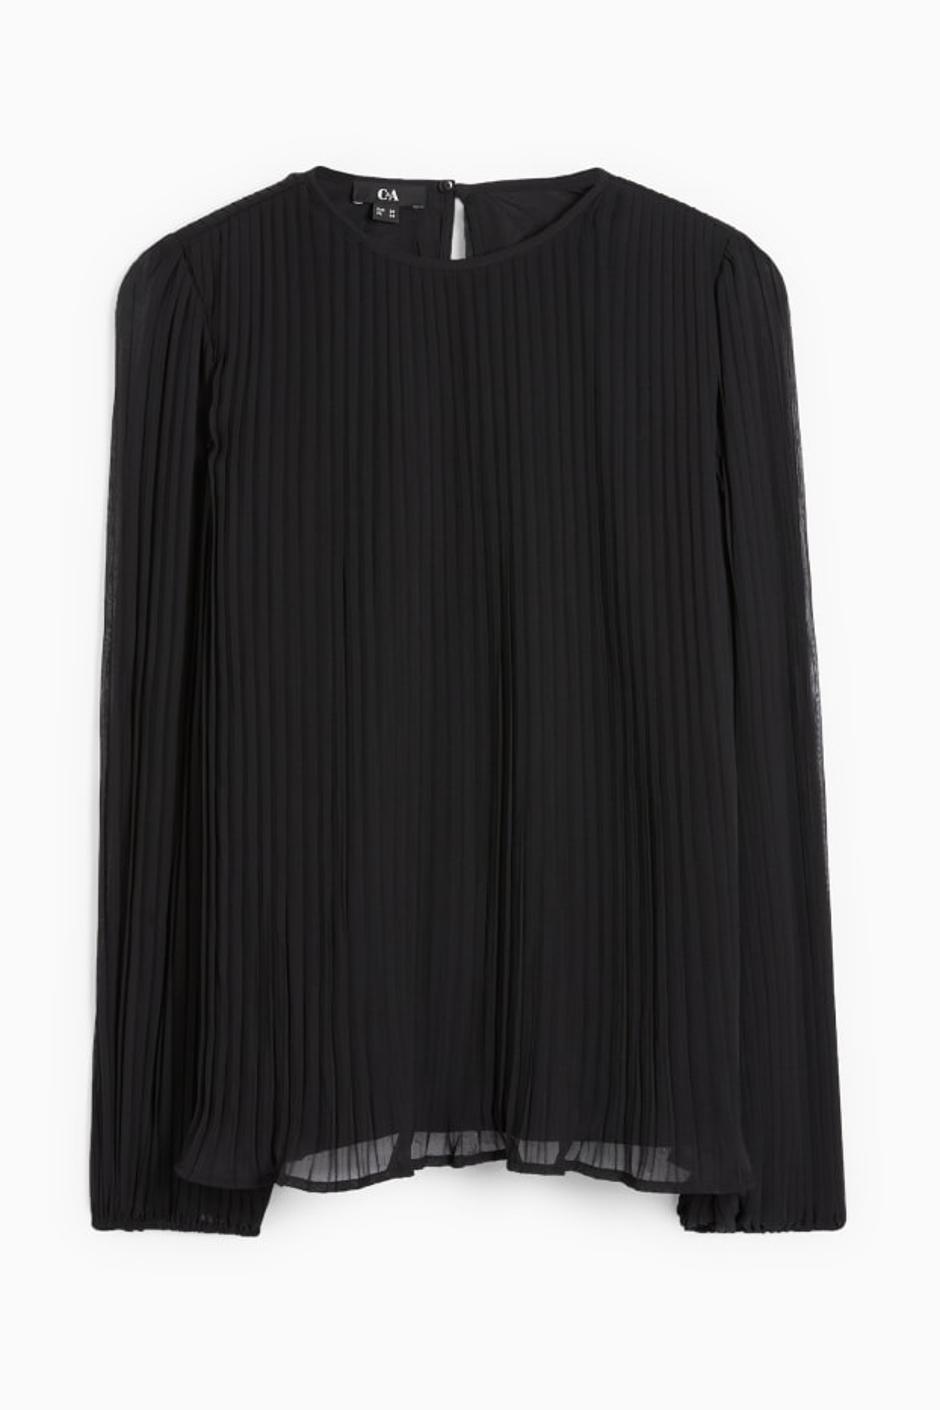 Foto: C&A, crna plisirana bluza | Autor: C&A